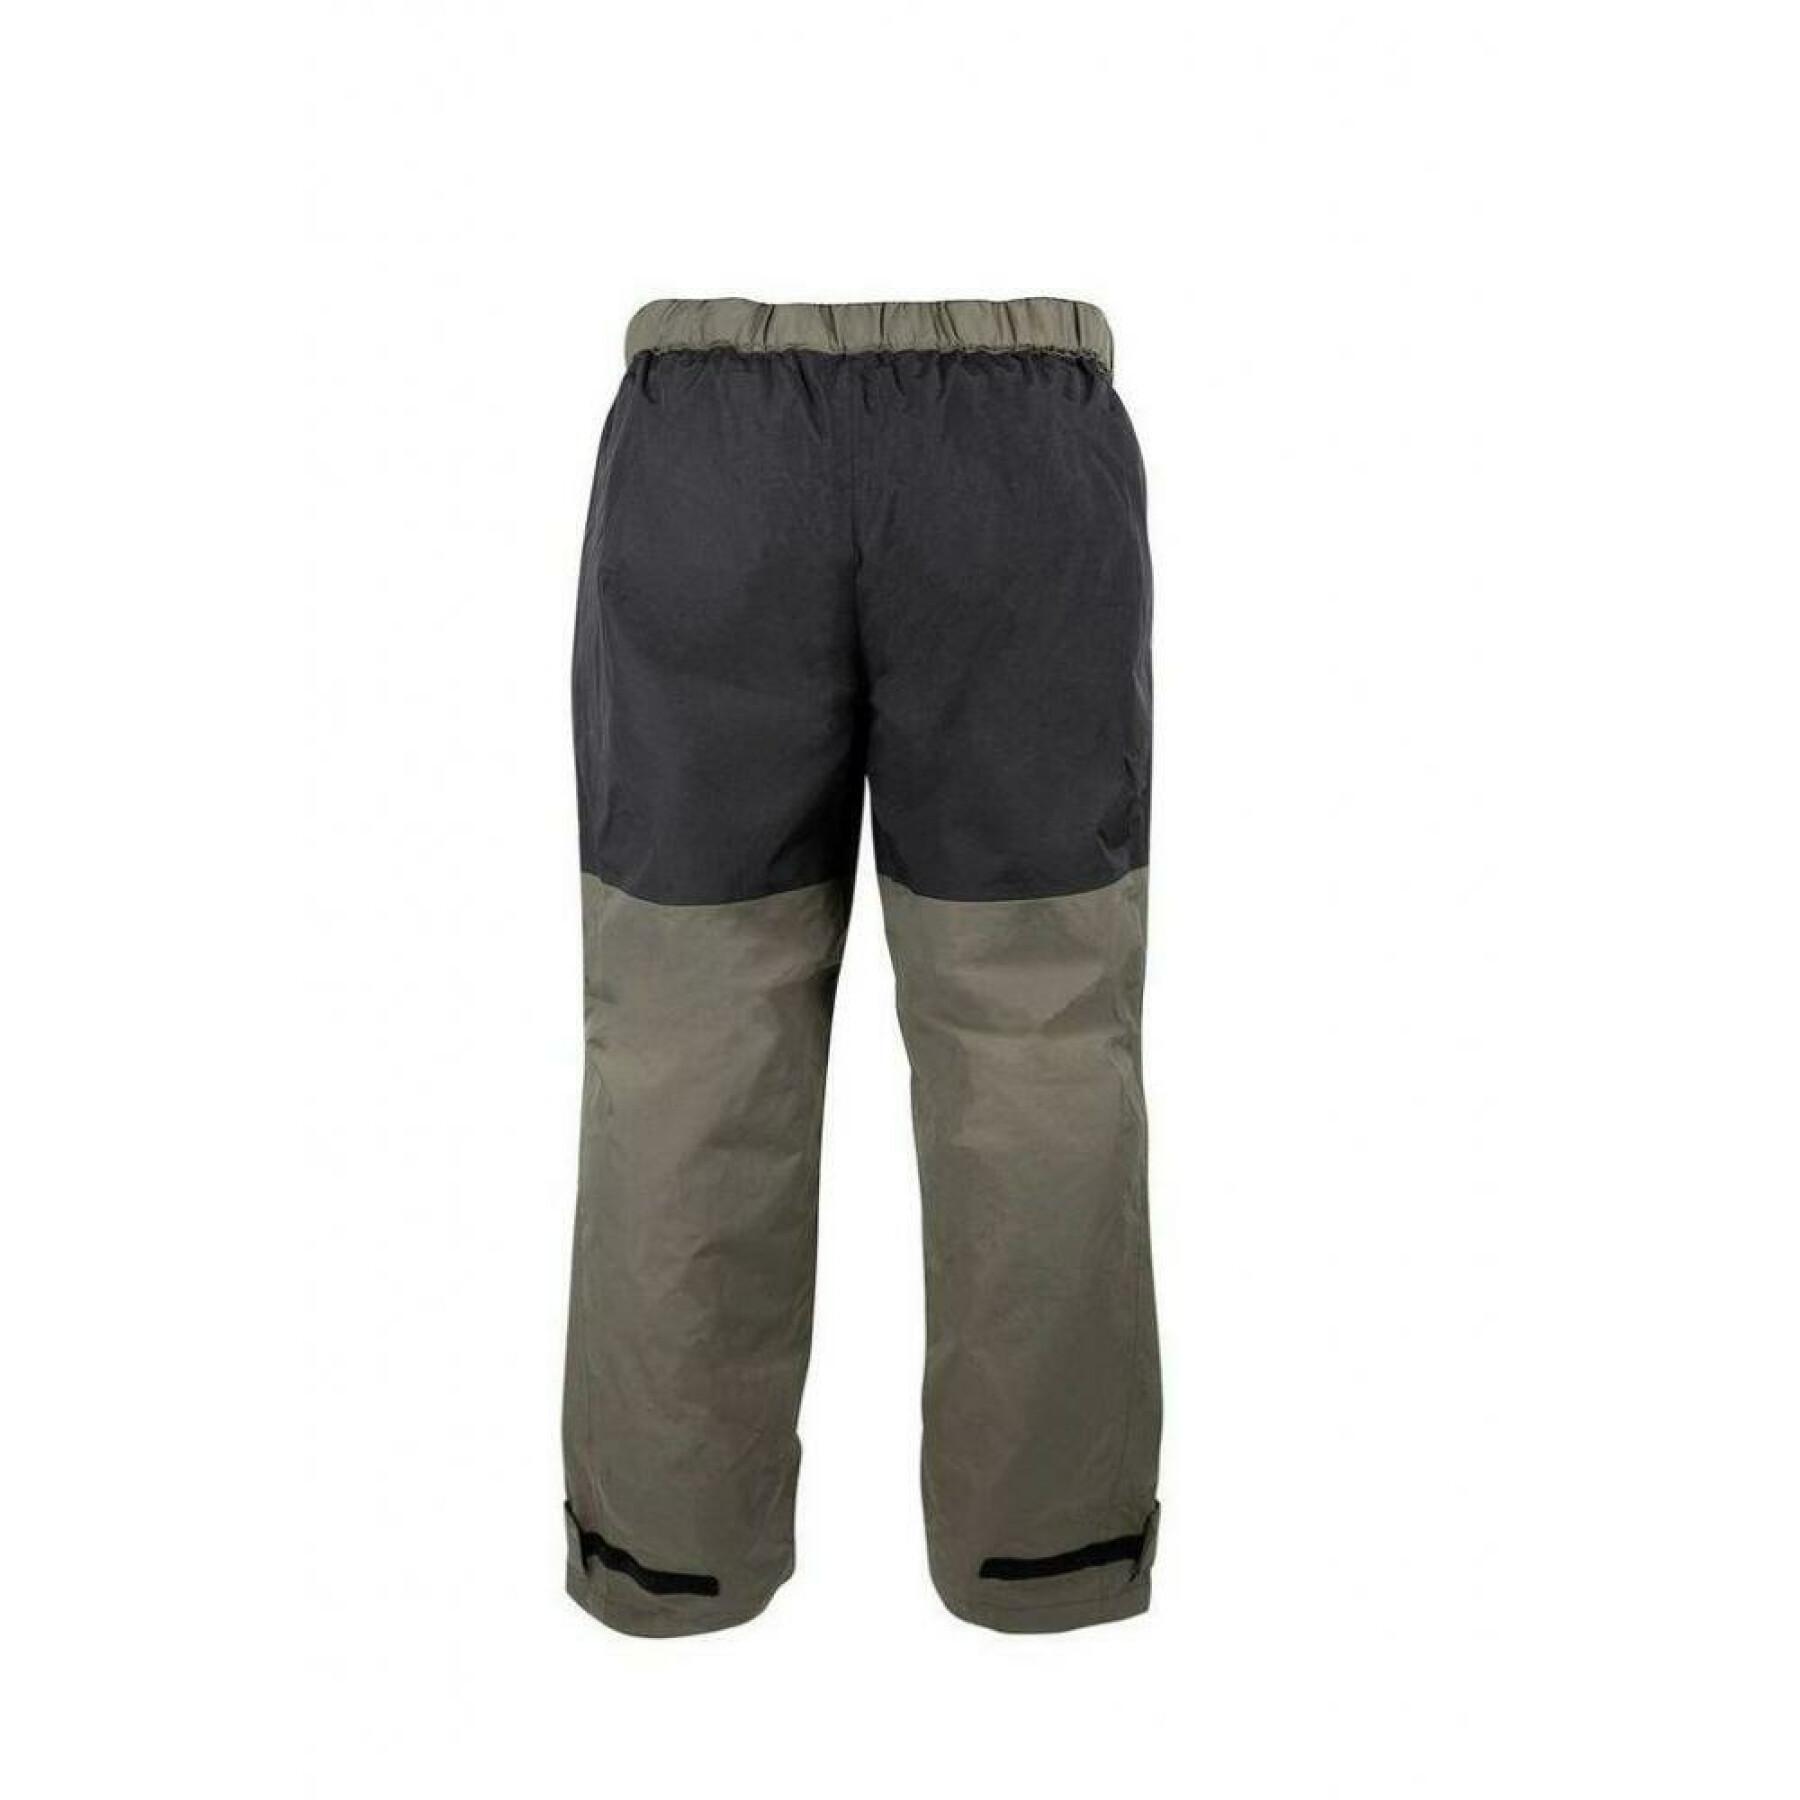 Pantalones impermeables Korum neoteric